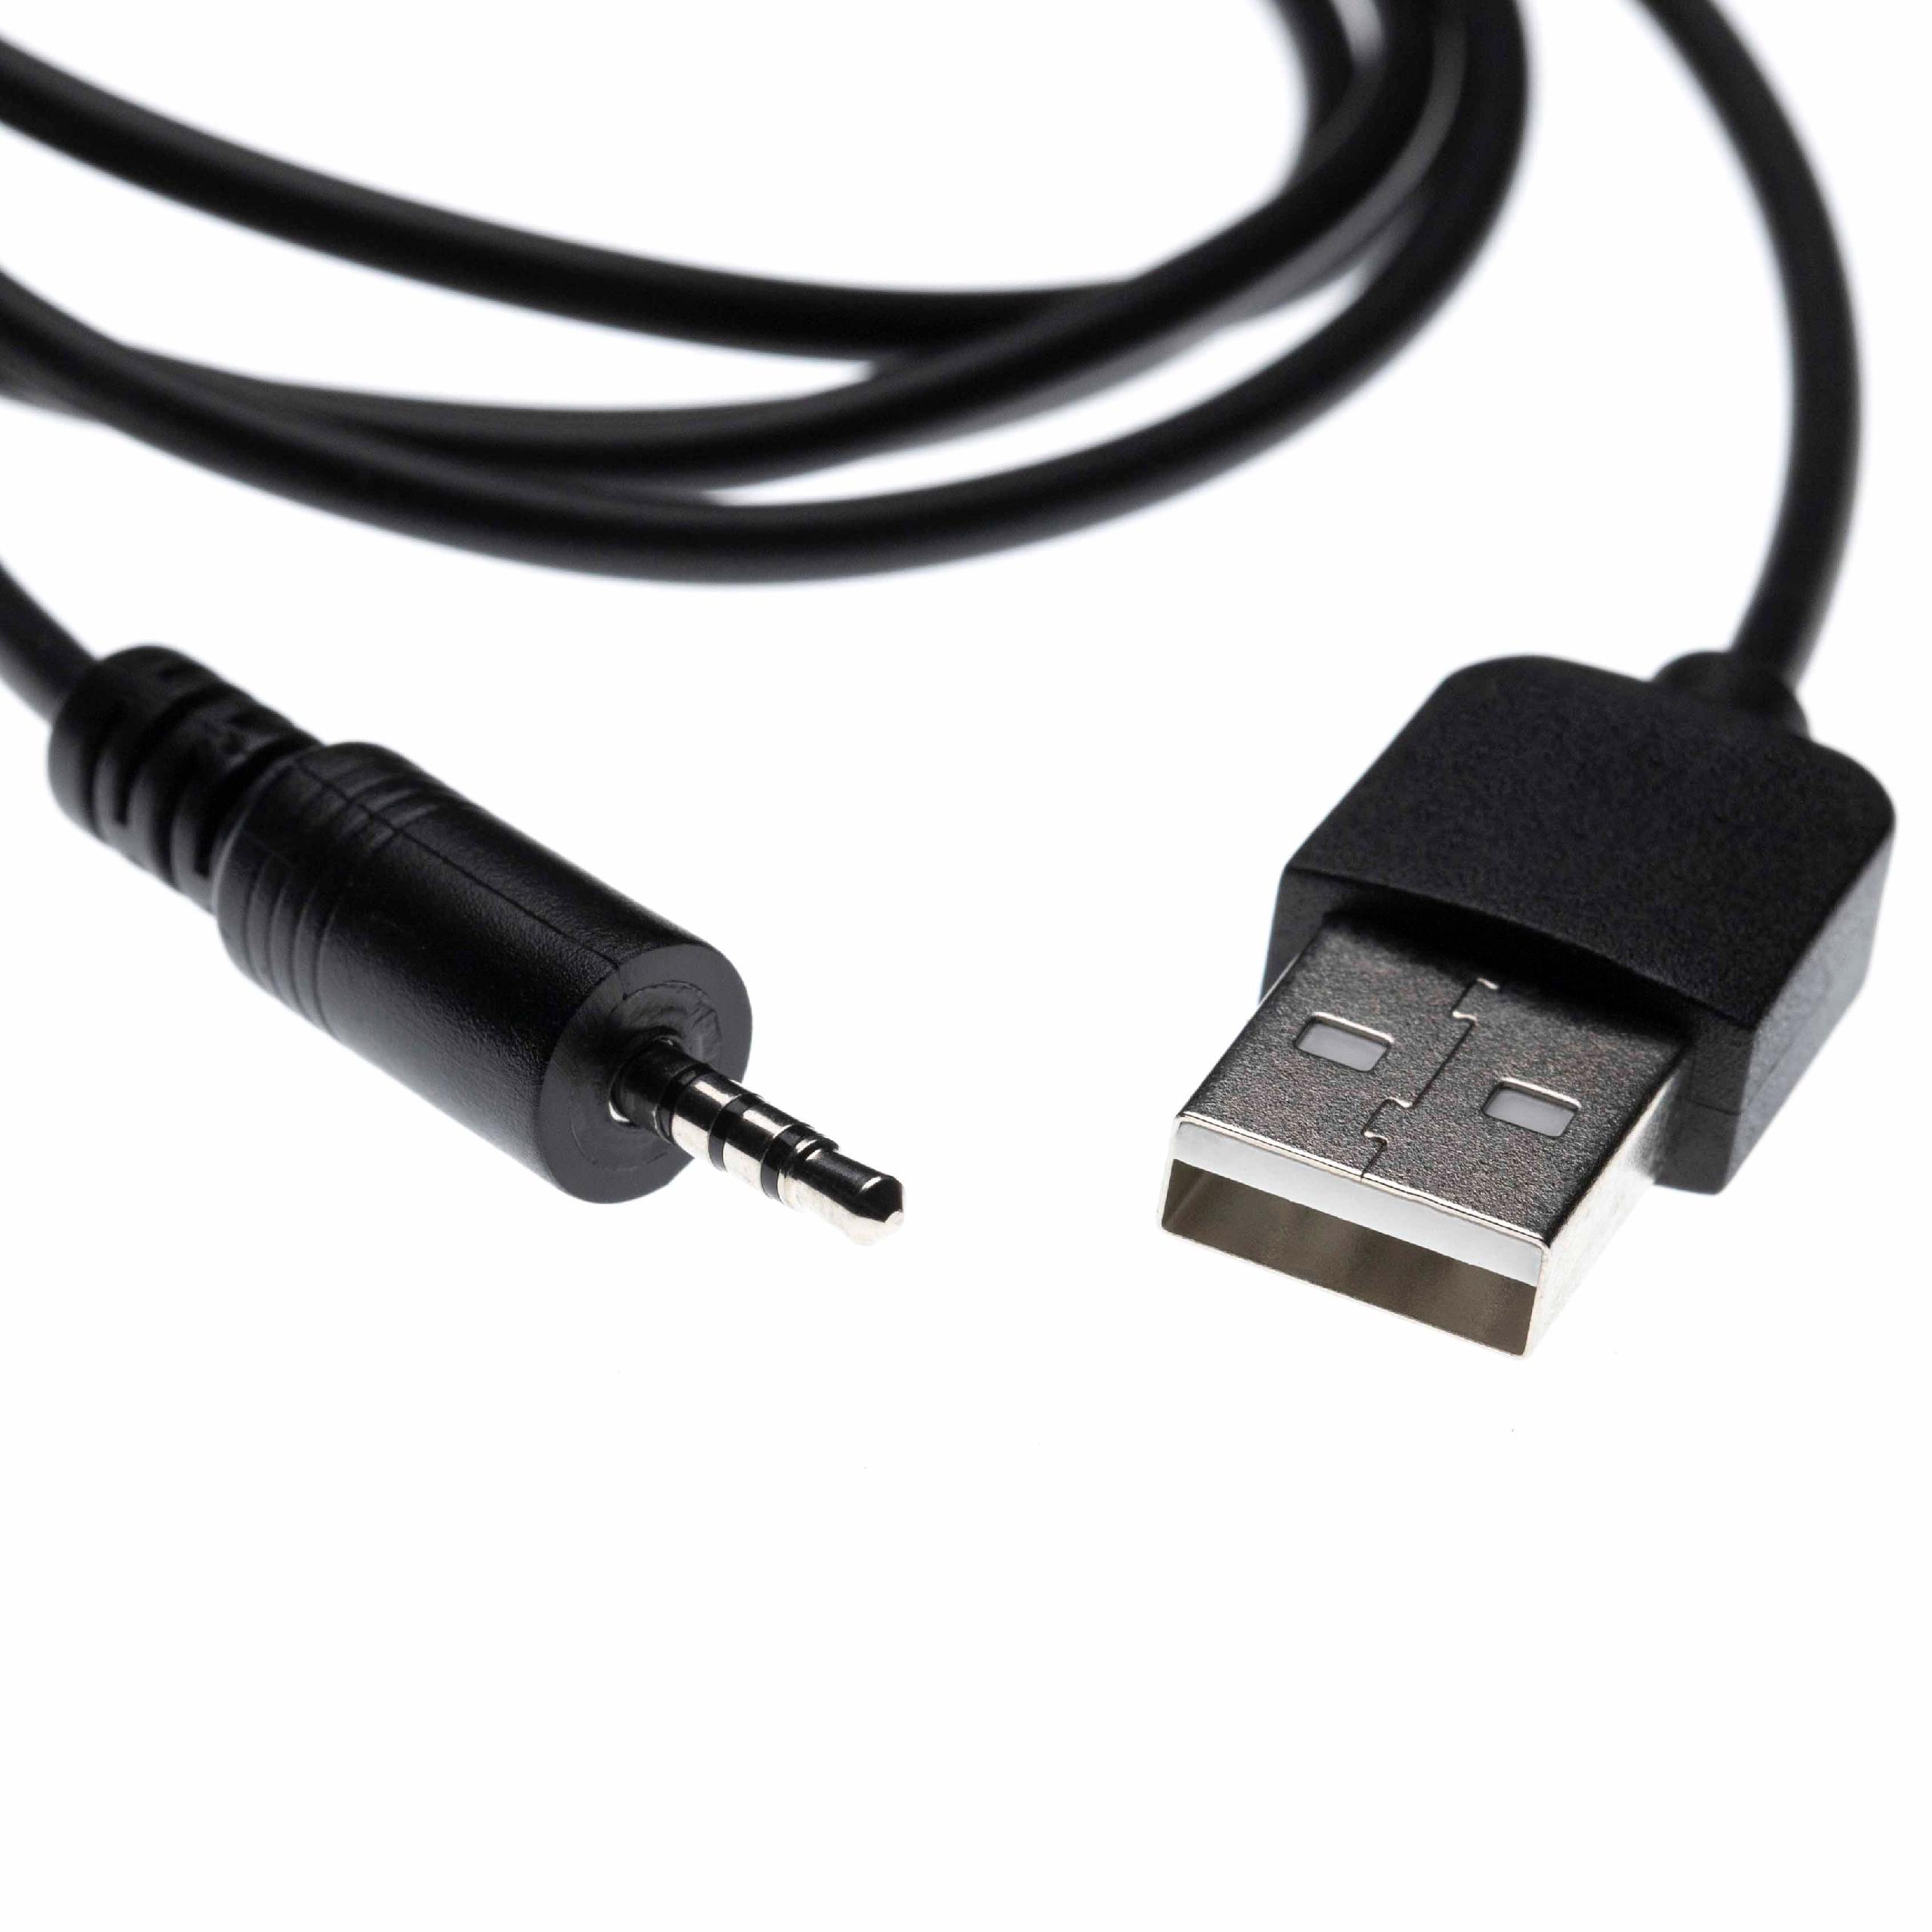 USB Charging Cable to 2.5 mm Audio Jack as Replacement for AKG / Harman Kardon / JBL K490NC Headphones etc., B